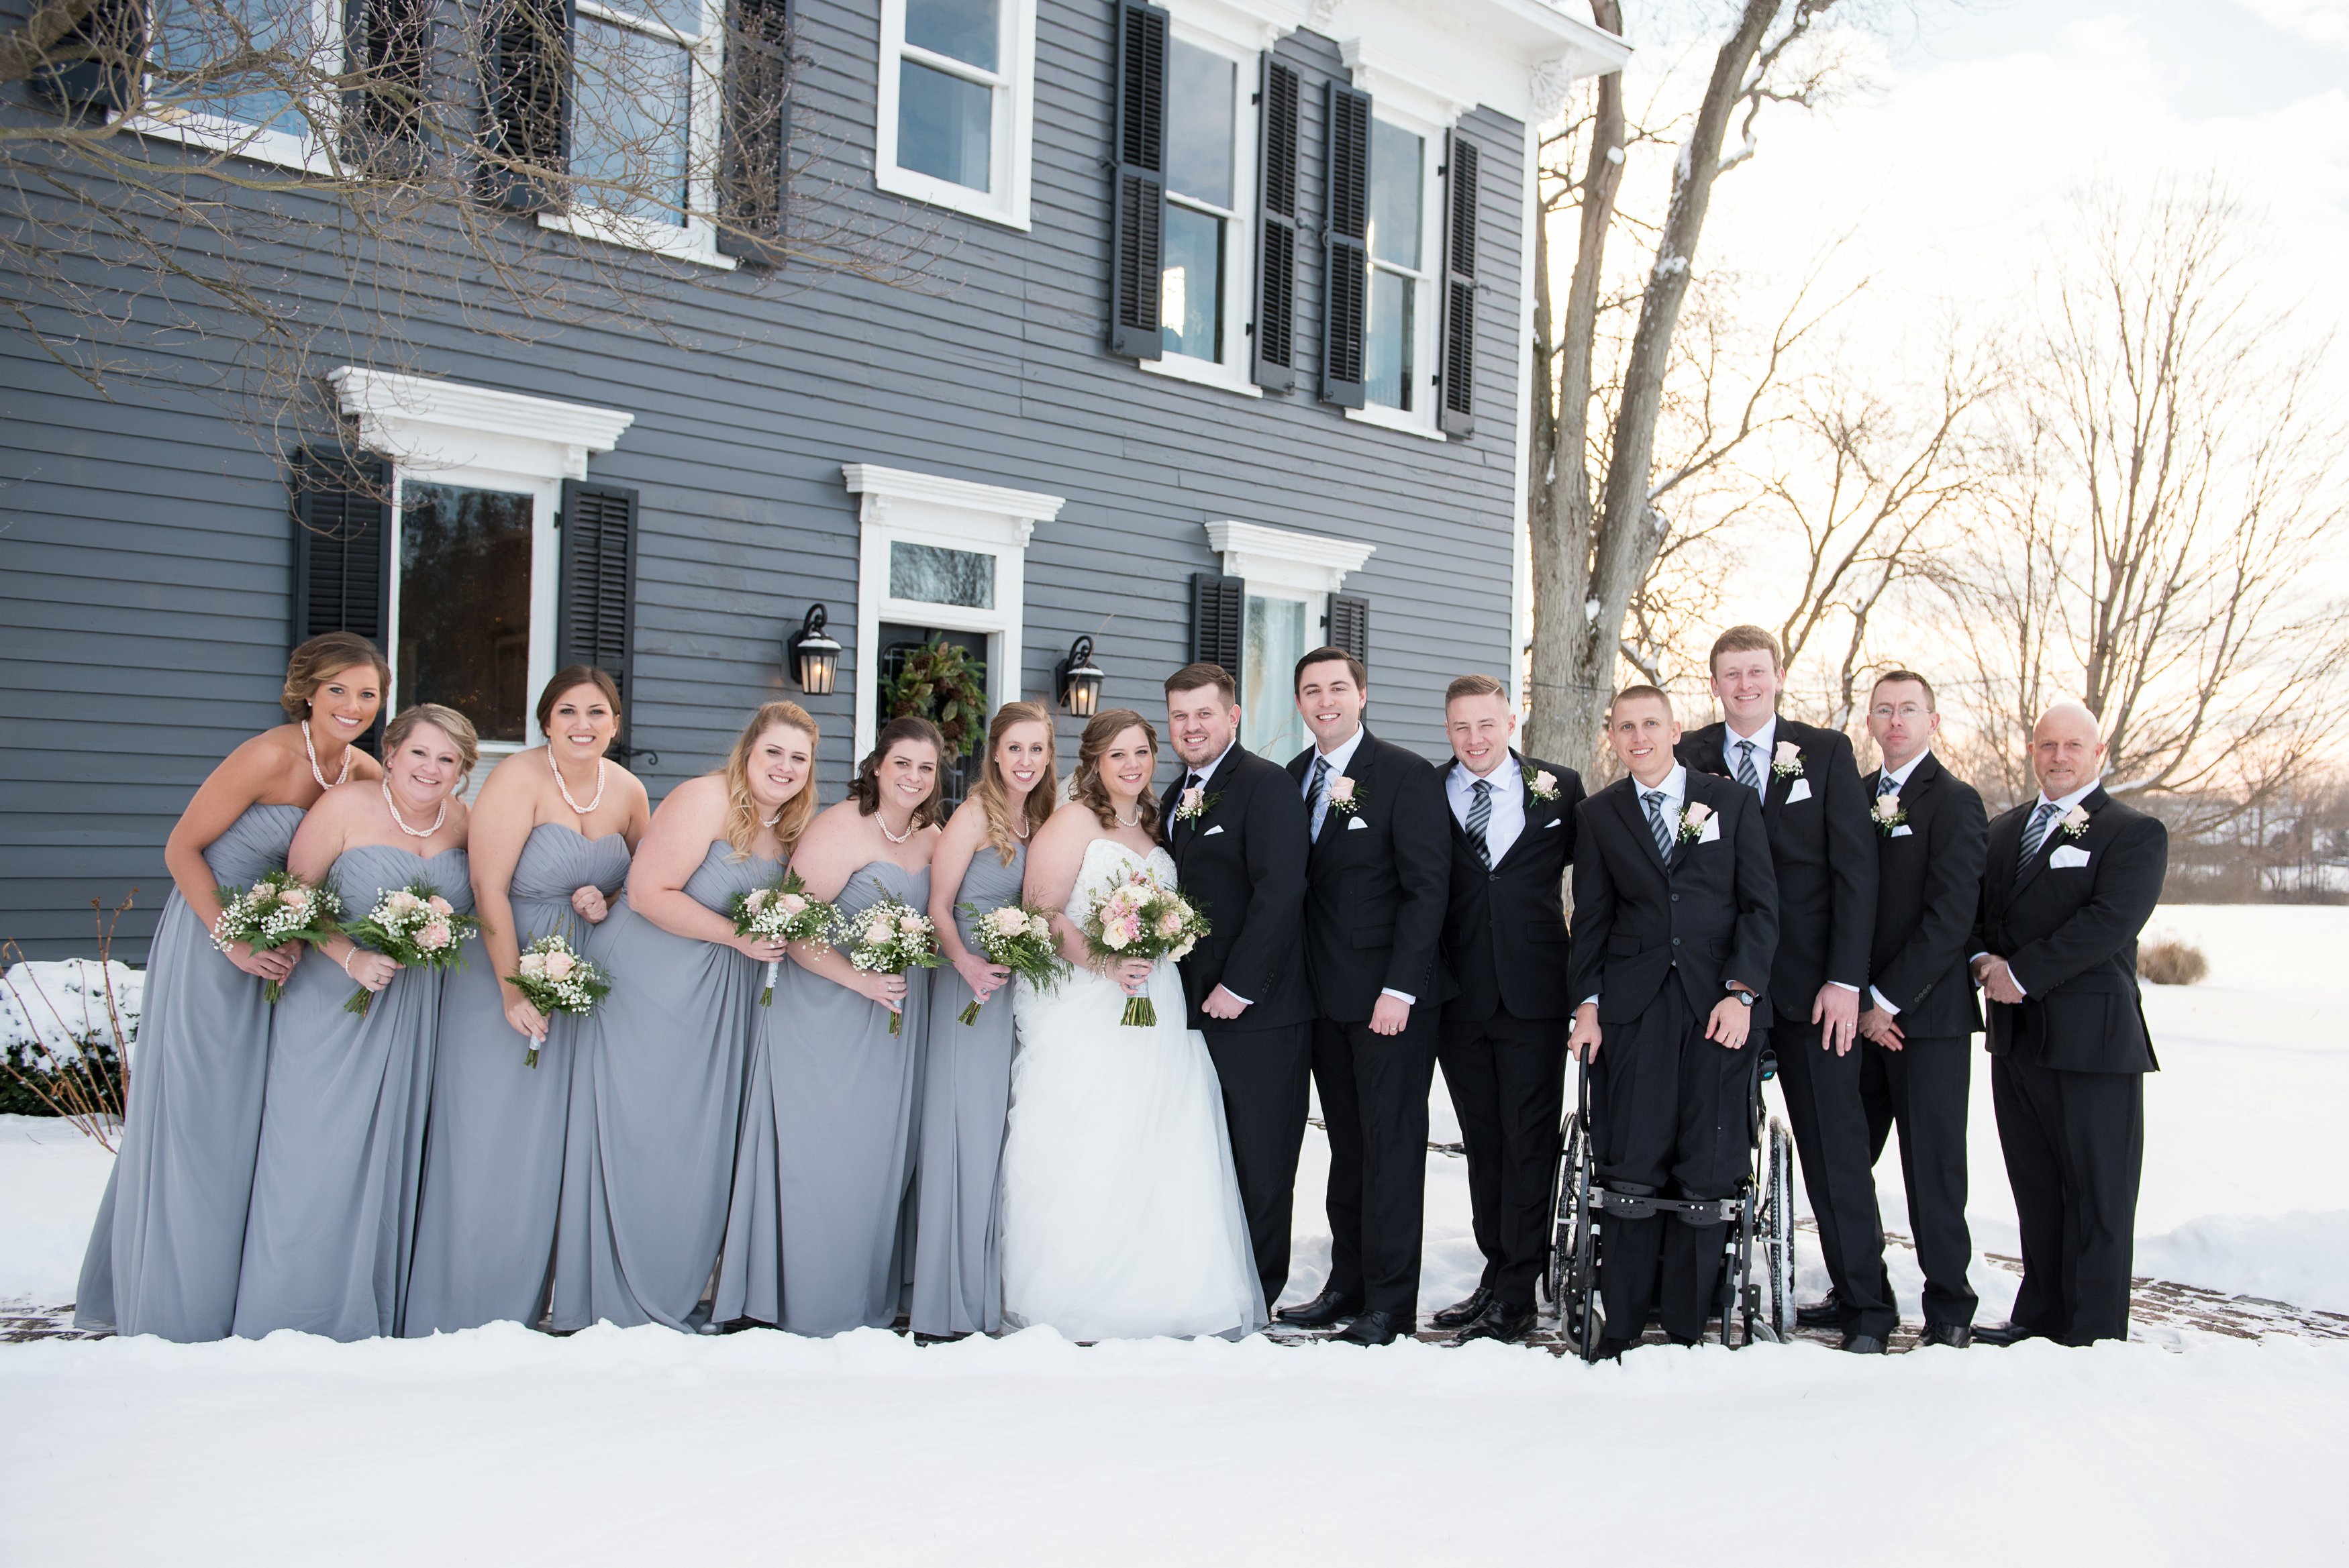 mustard seed gardens wedding | Sarah & Rachel Wedding Photographers | Winter Wedding | Great bridesmaids dresses